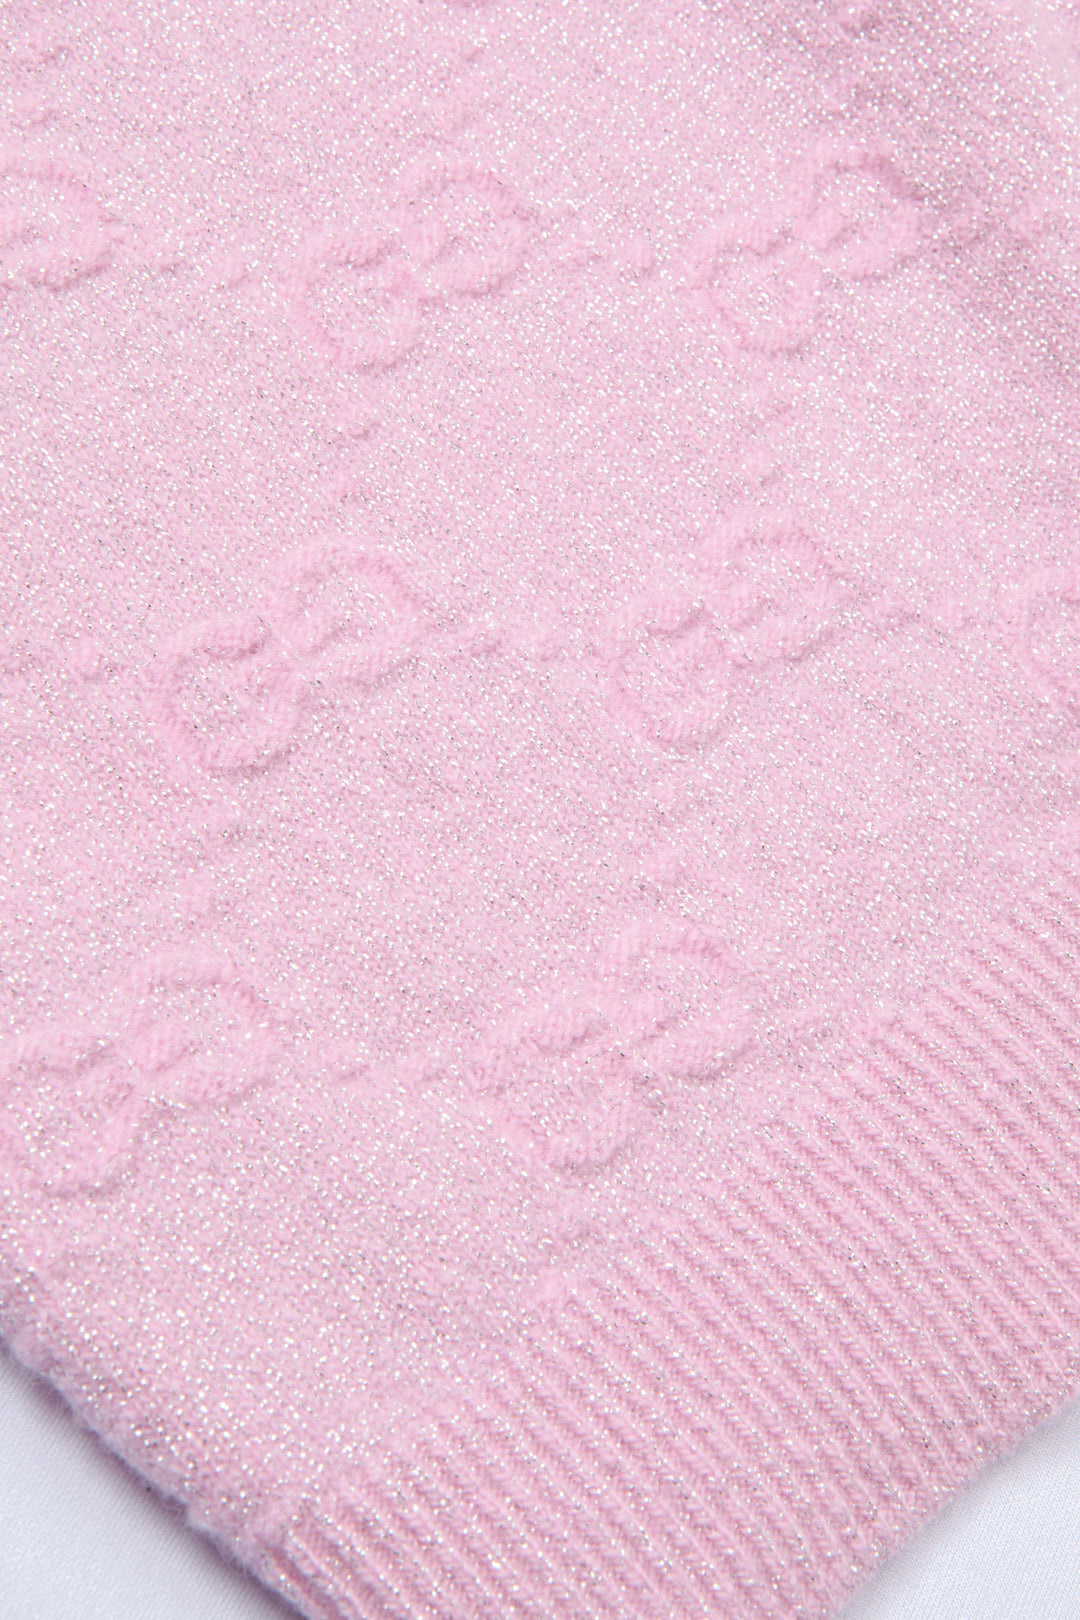 GUCCI Knit Top Pink